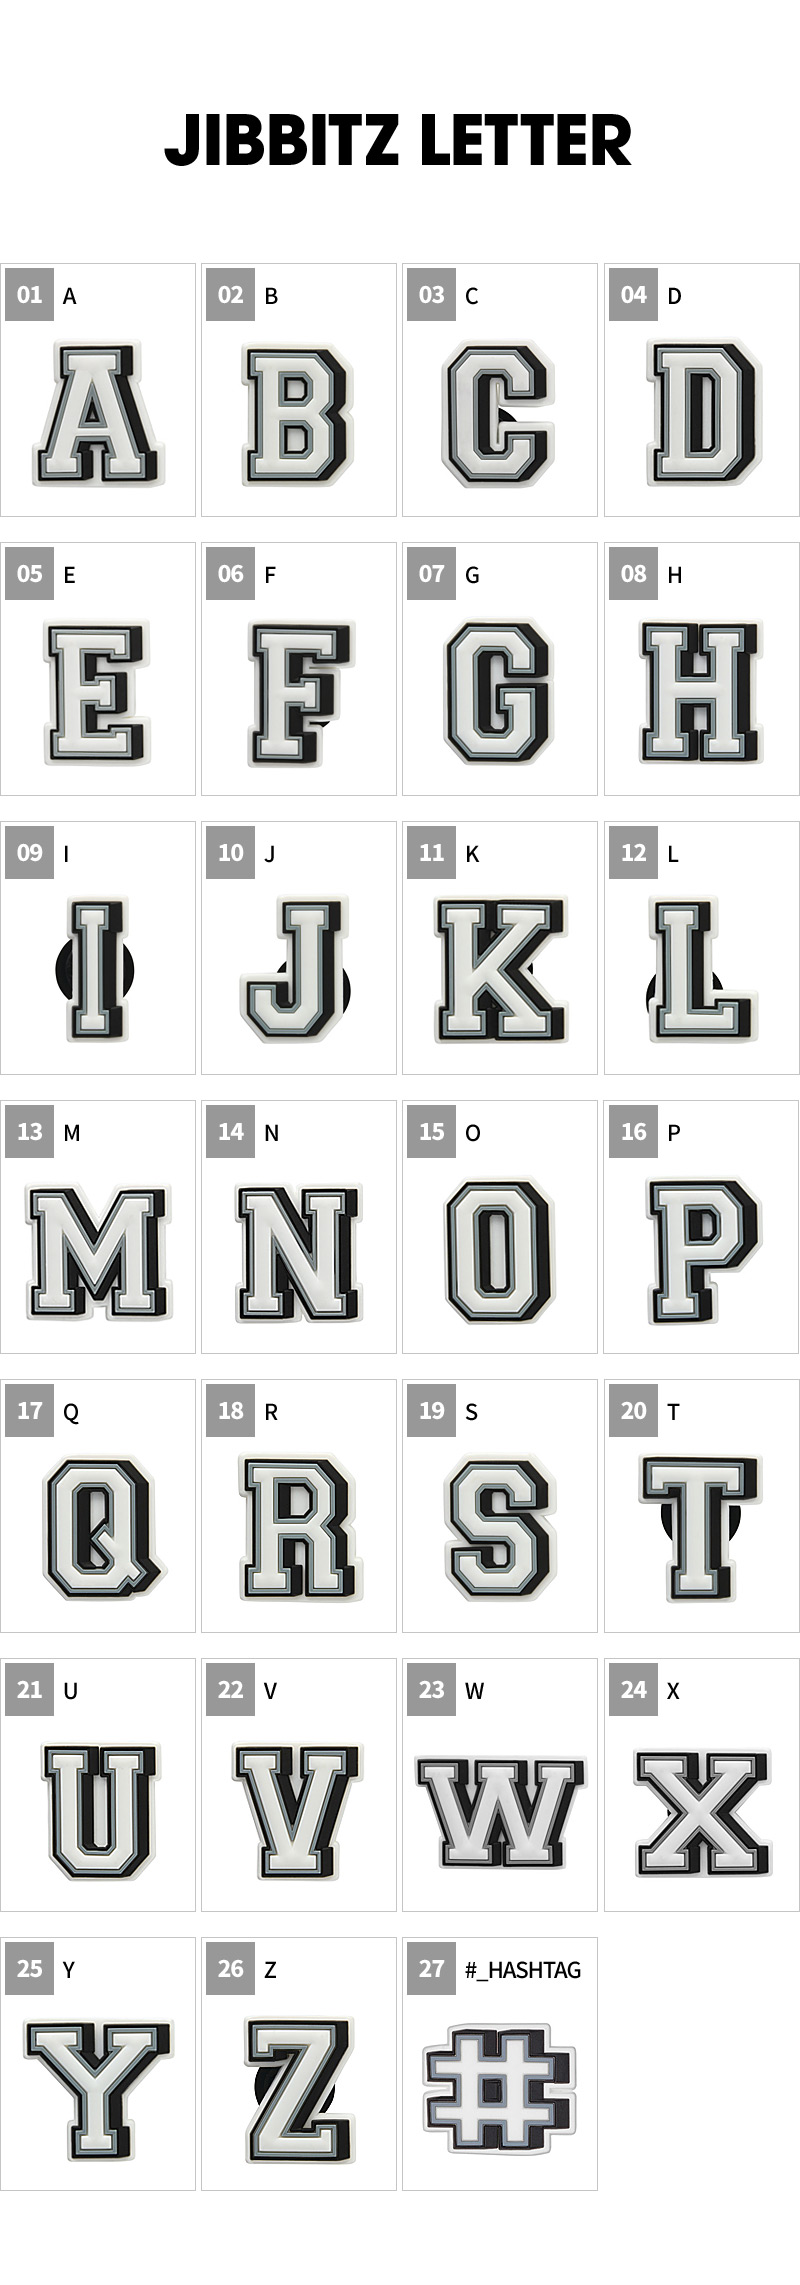 alphabet jibbitz